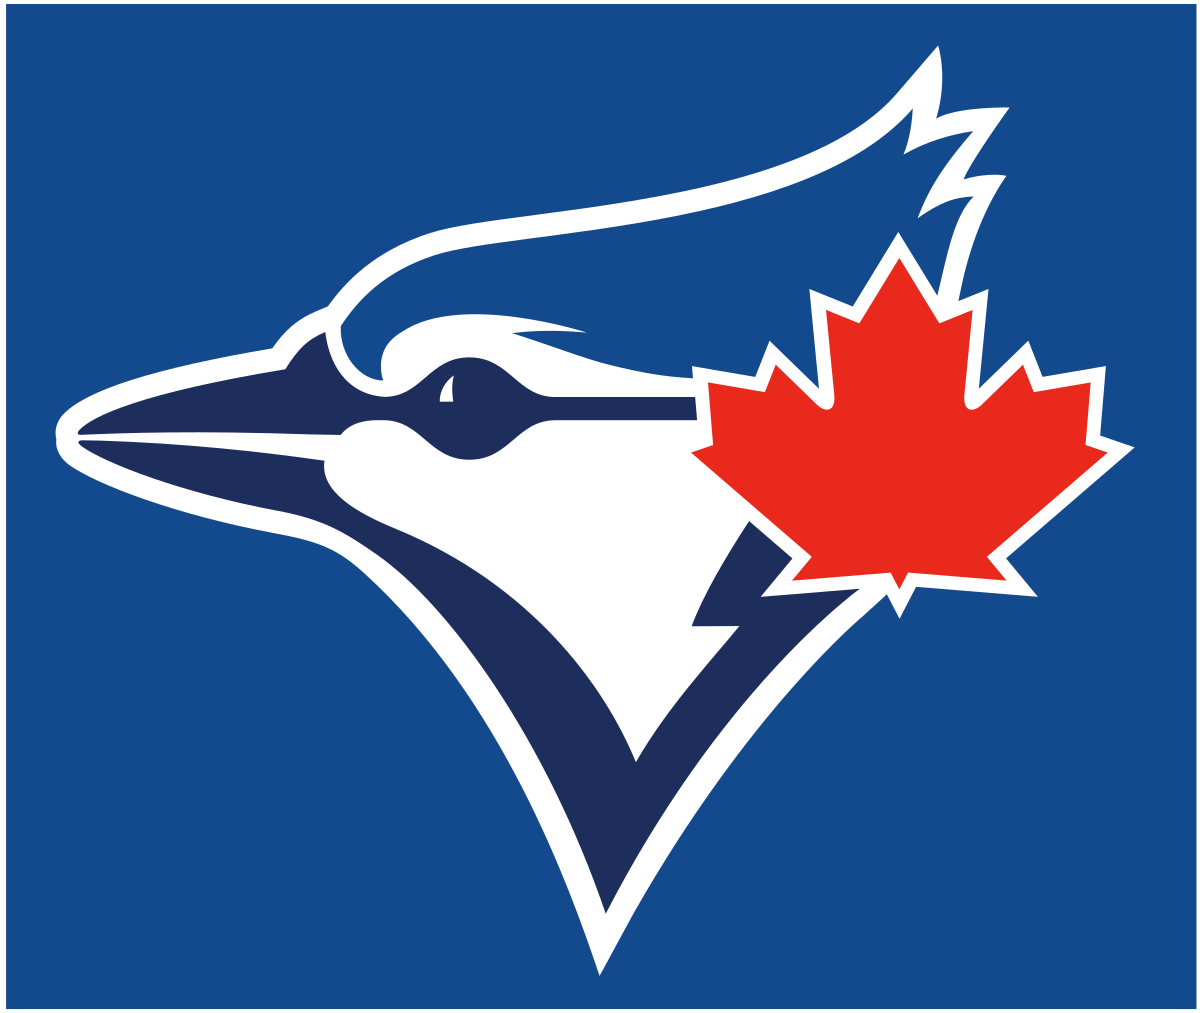 Toronto Blue Jays | Organizational Profile, Work & Jobs